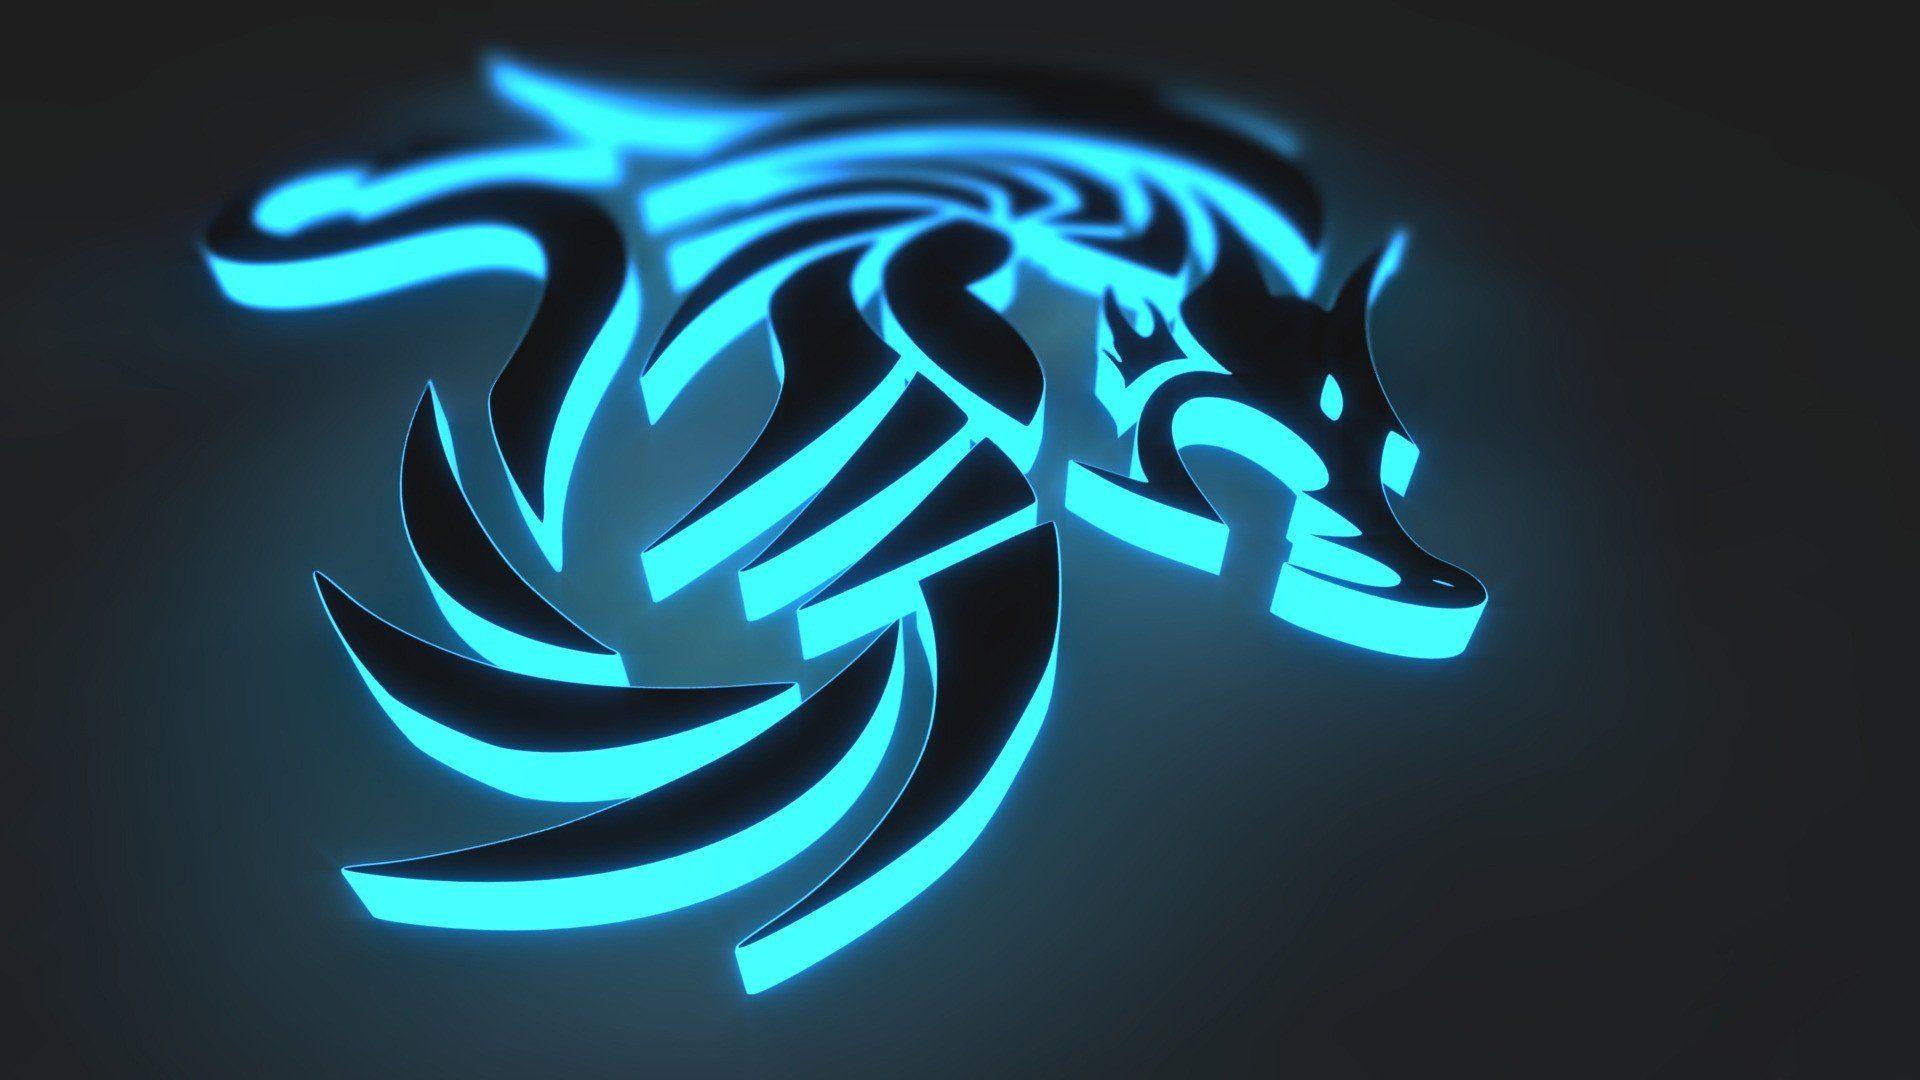 3D Dragon Logos